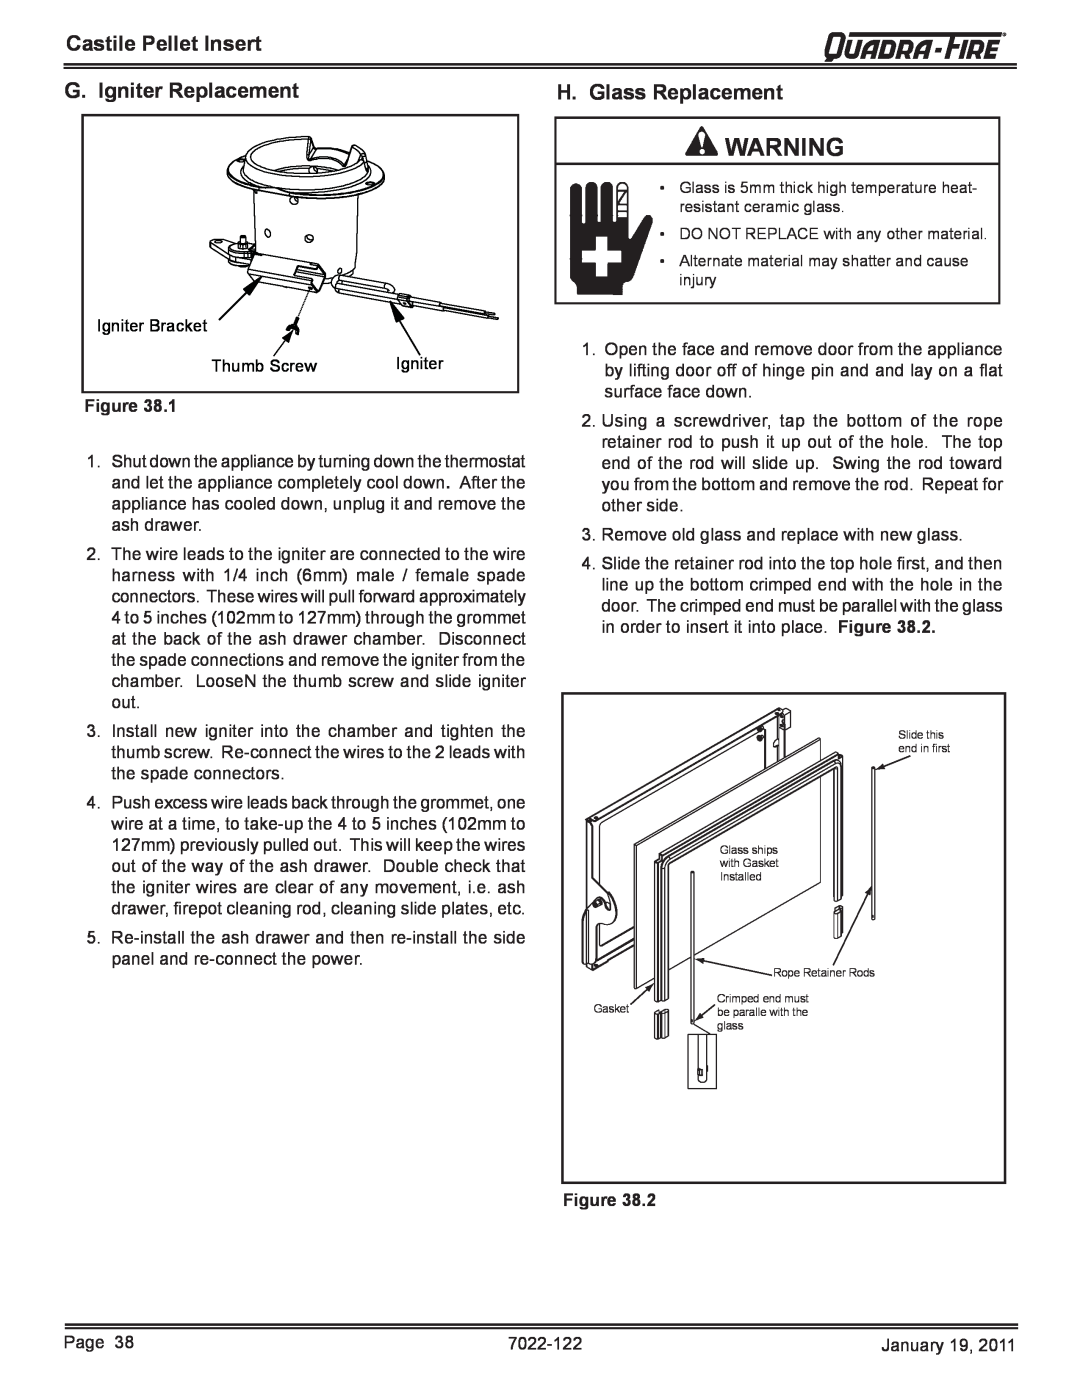 Quadra-Fire CASTILEI-MBK owner manual G. Igniter Replacement, H. Glass Replacement, Castile Pellet Insert, Figure 